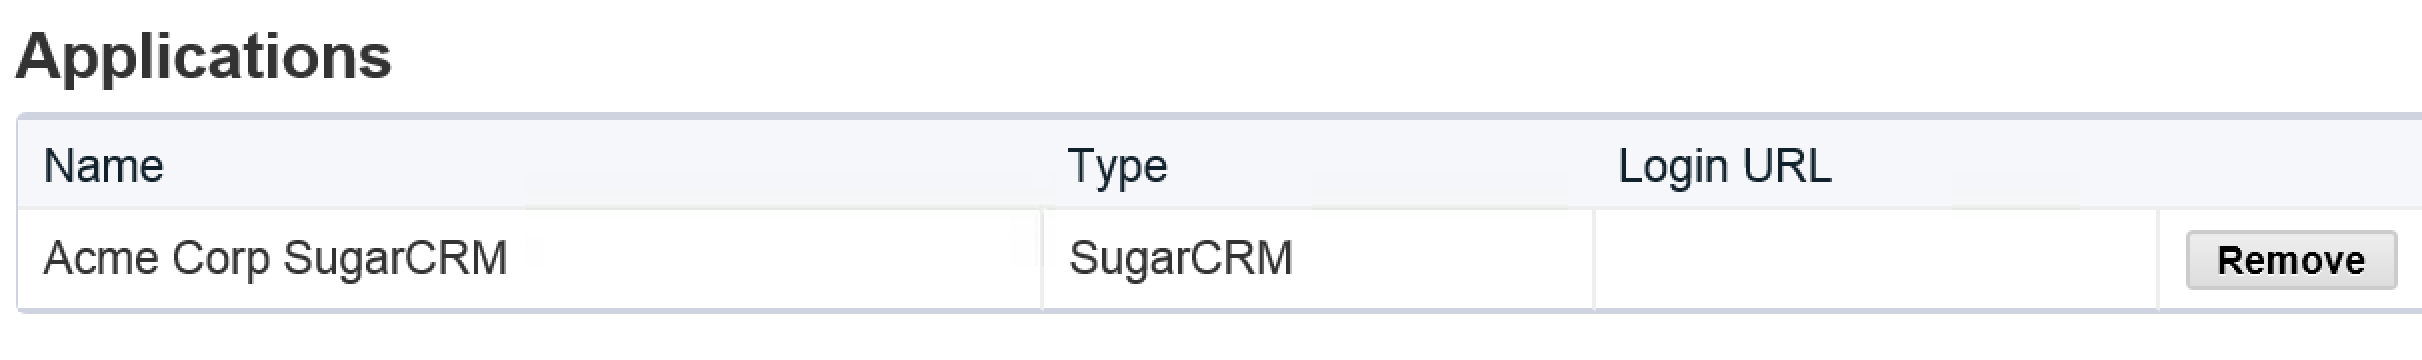 SugarCRM Application Added